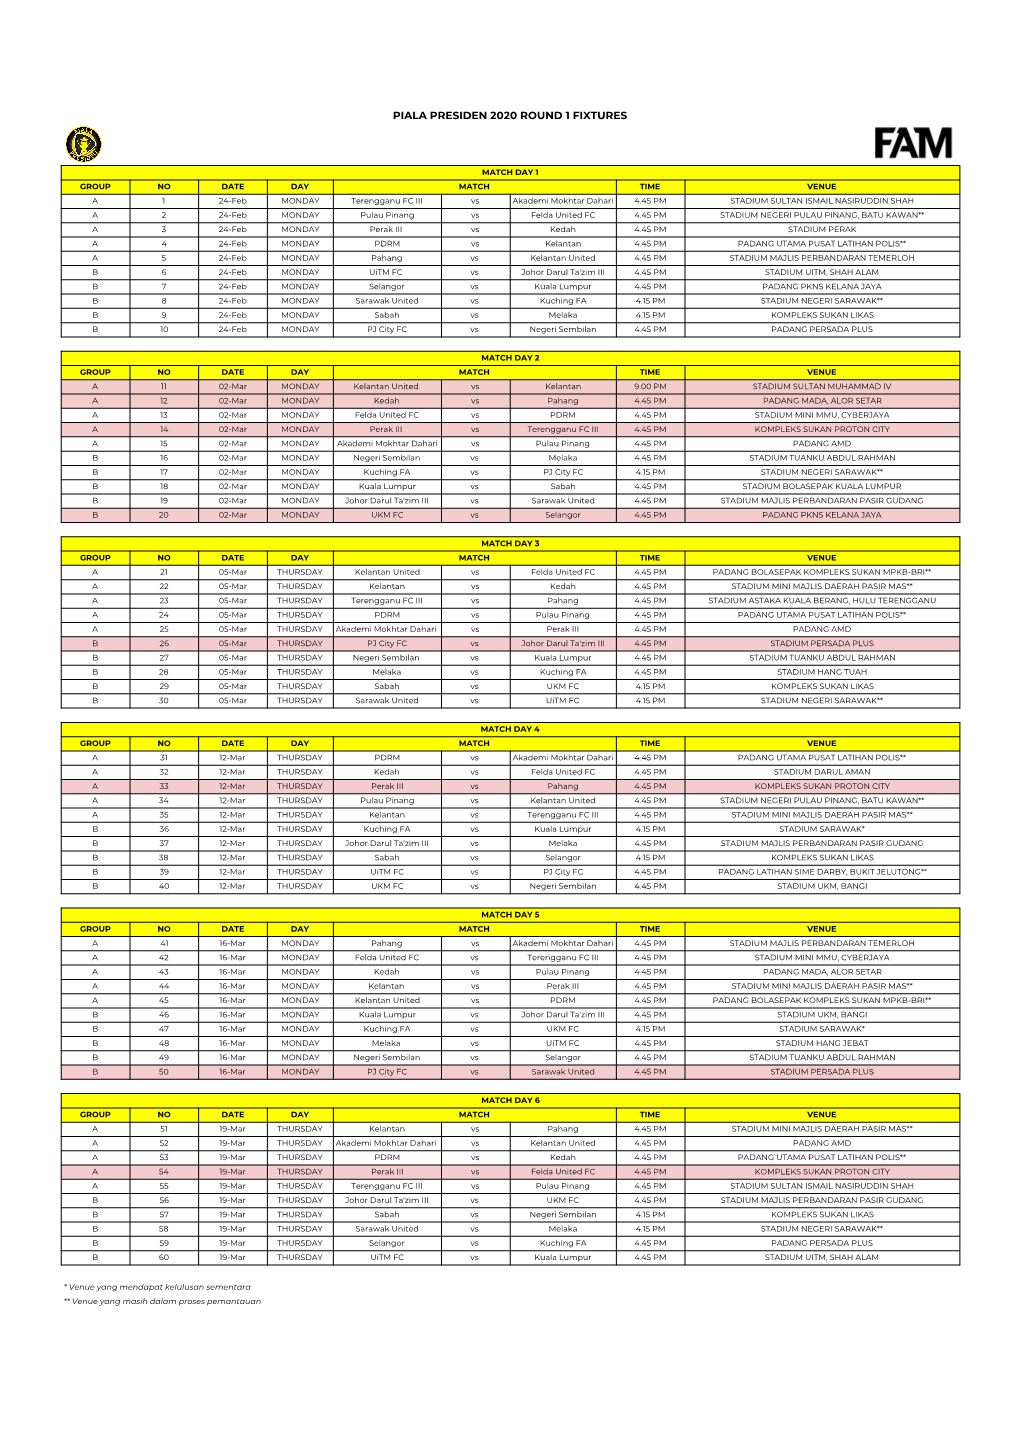 Piala Presiden 2020 Round 1 Fixtures